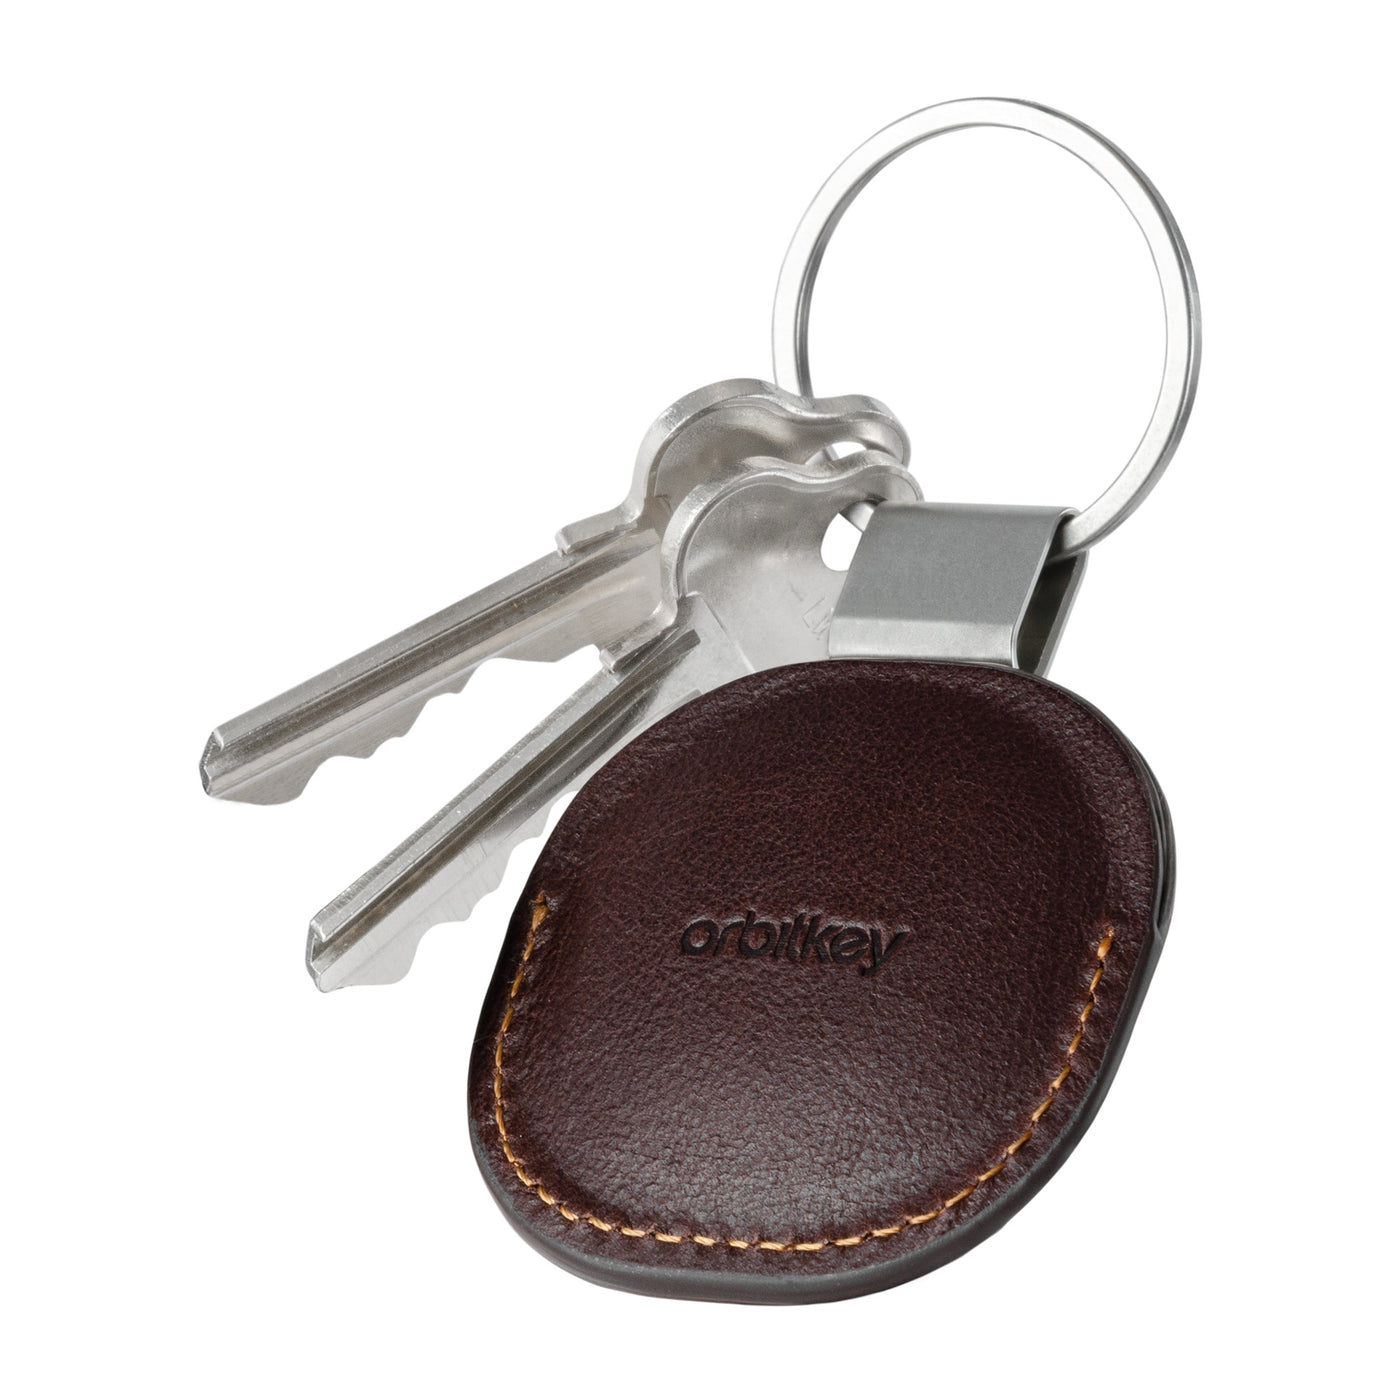 Orbitkey Leather Key Organiser + Multi-Tool V2 Gift Set - Espresso/Black